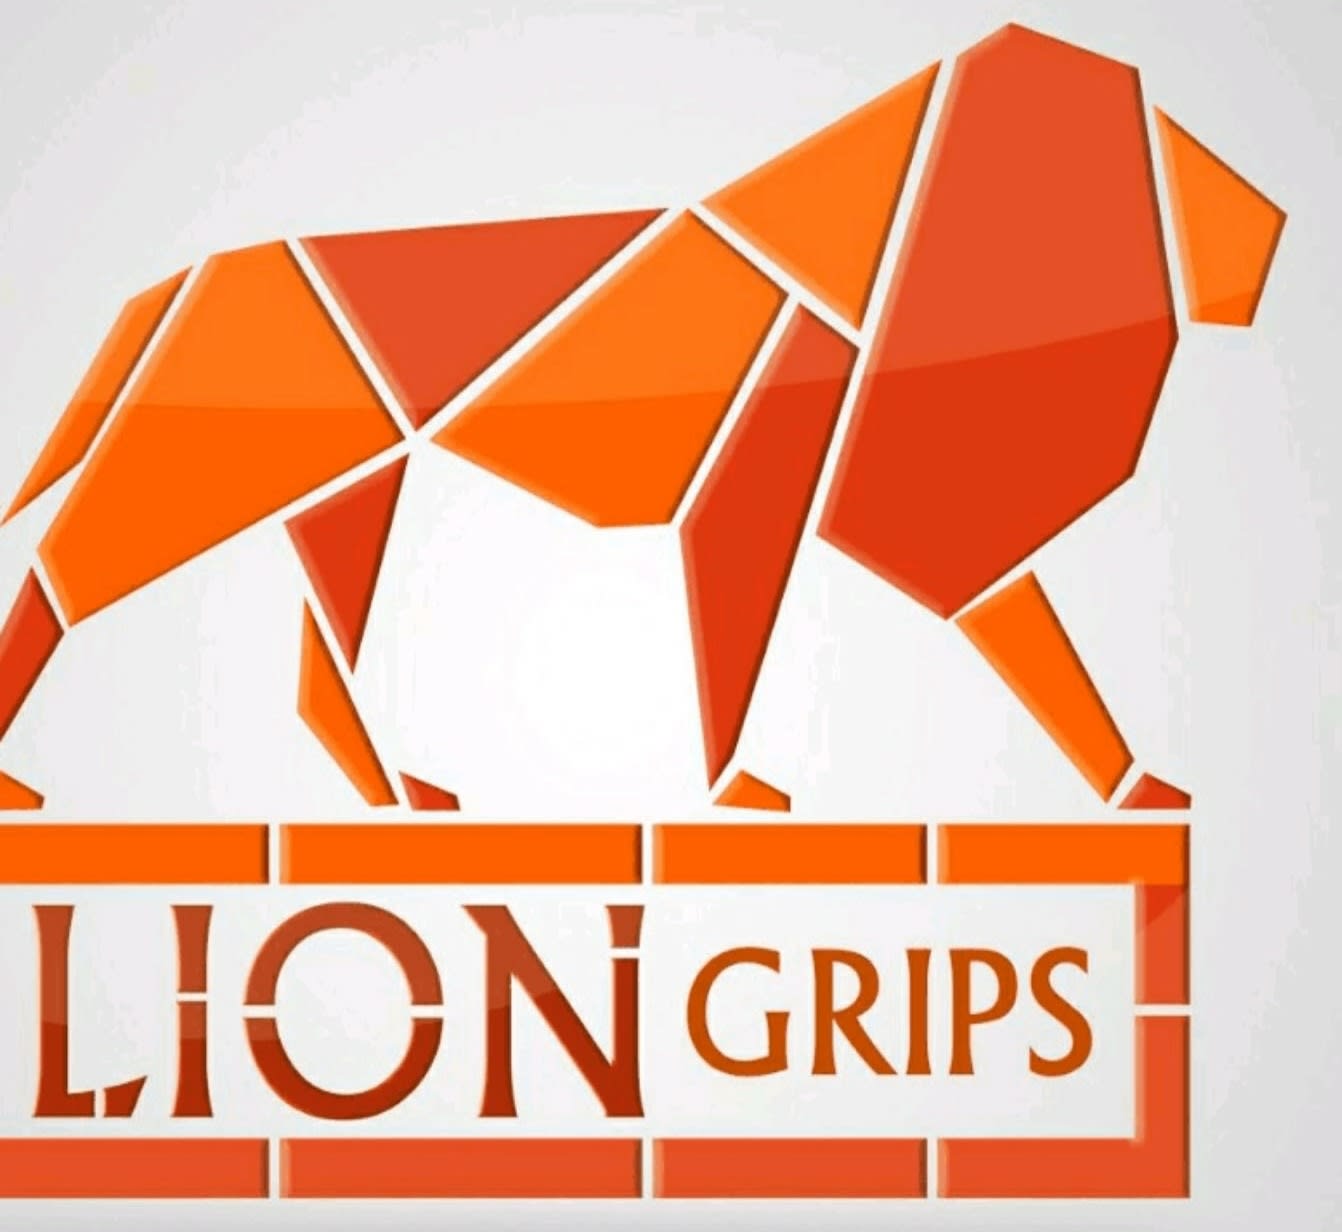 Lion Grips